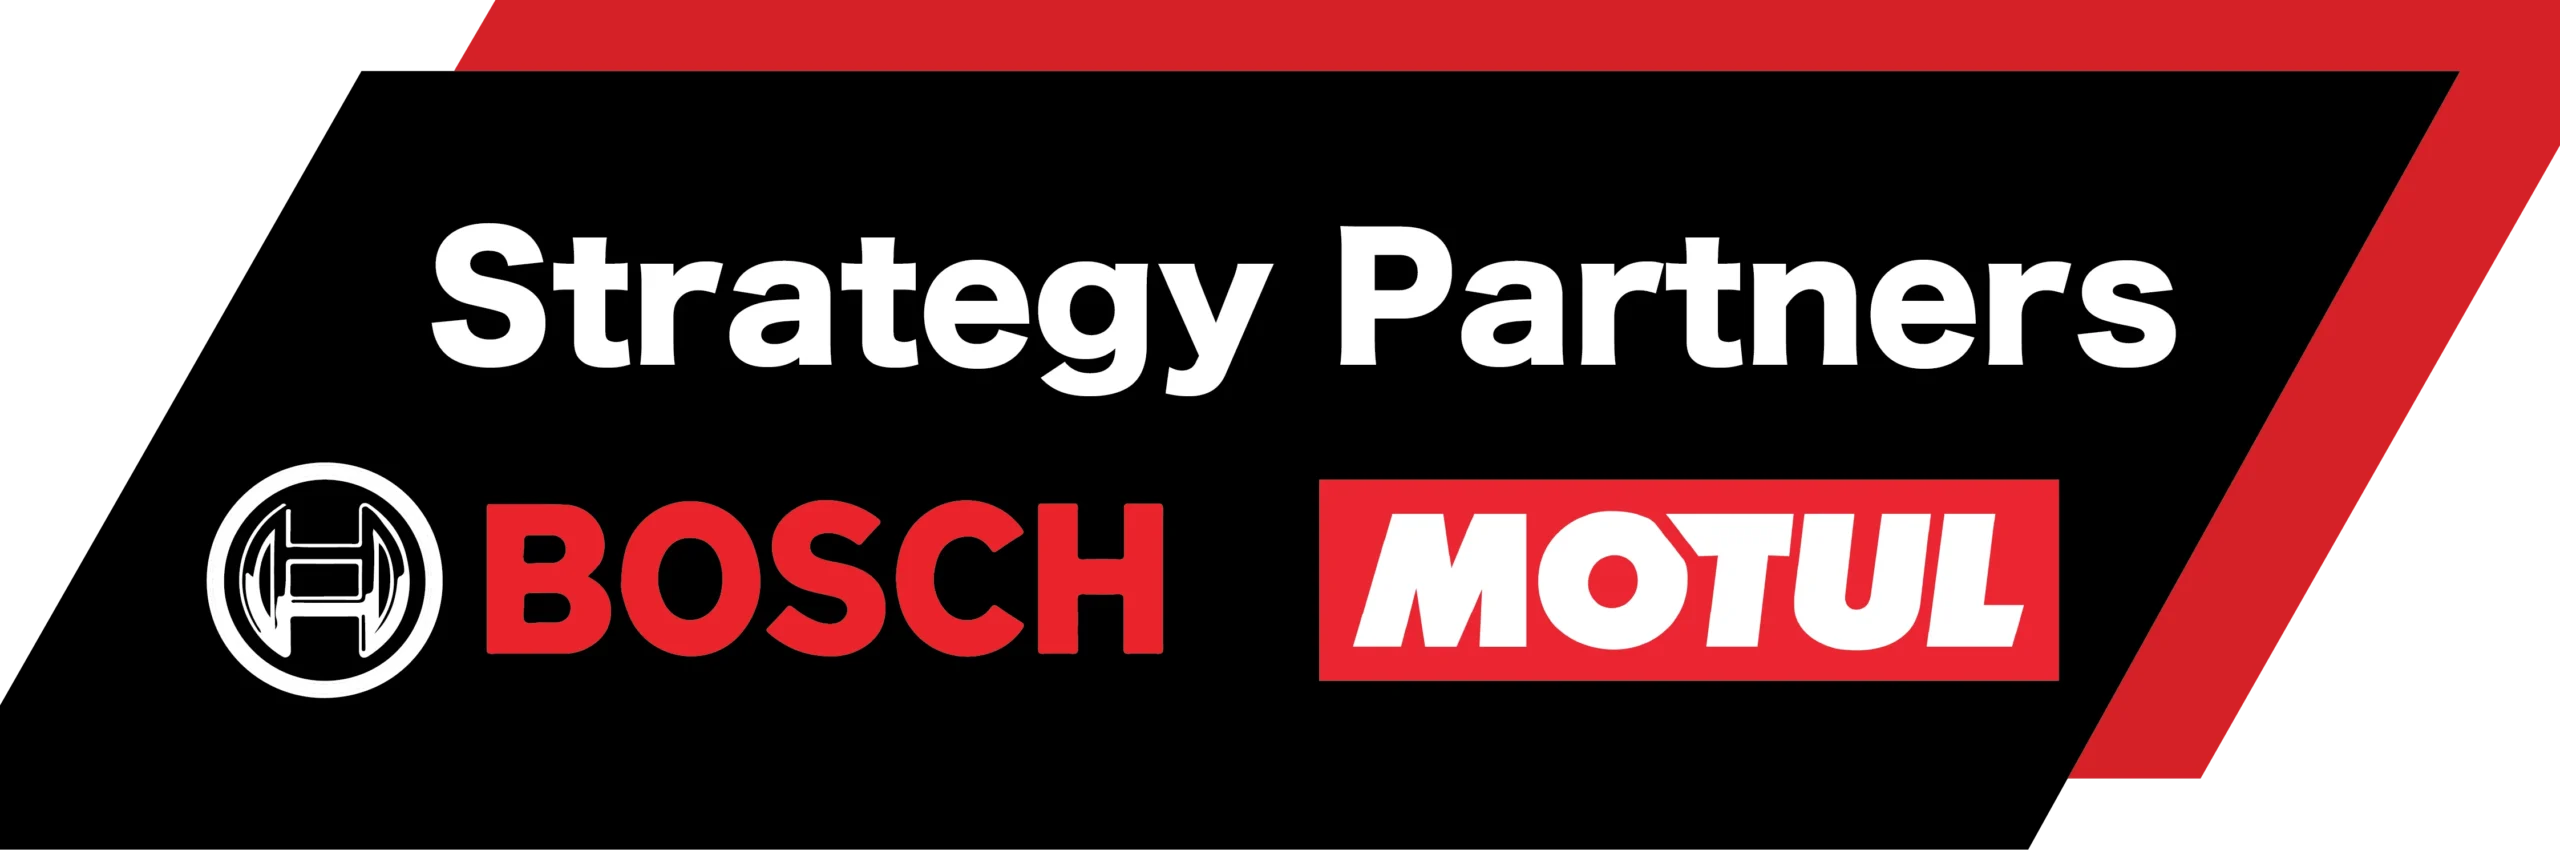 strategy banner motul and bosch